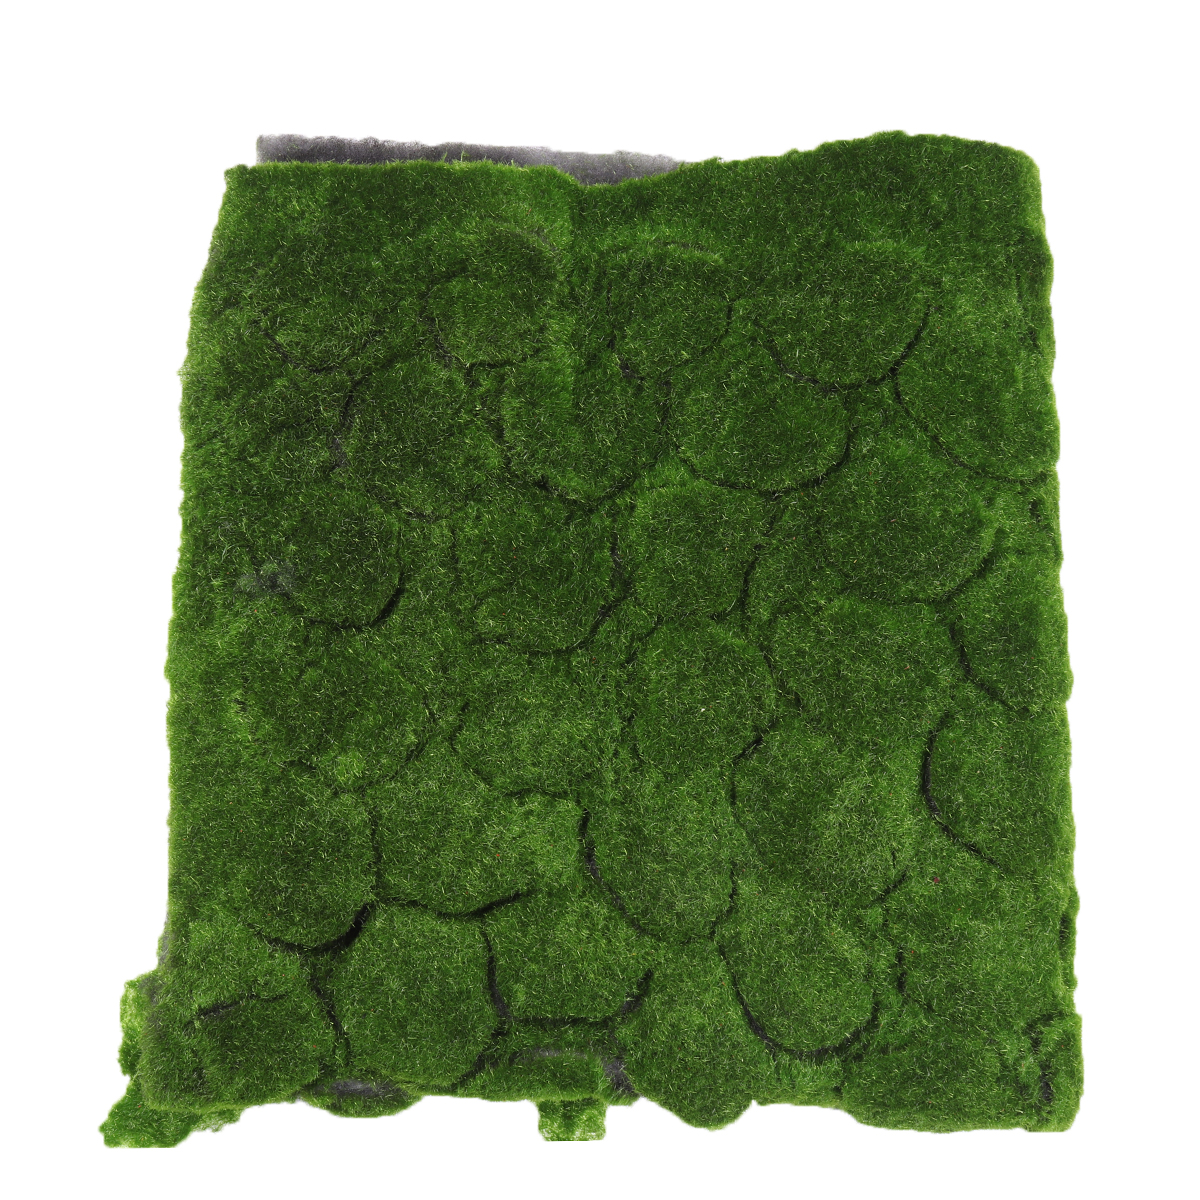 Artificial-Moss-Mat-DIY-Landscape-Flat-Grass-Lawn-Turf-Plants-Shop-Home-Decor-1825556-7